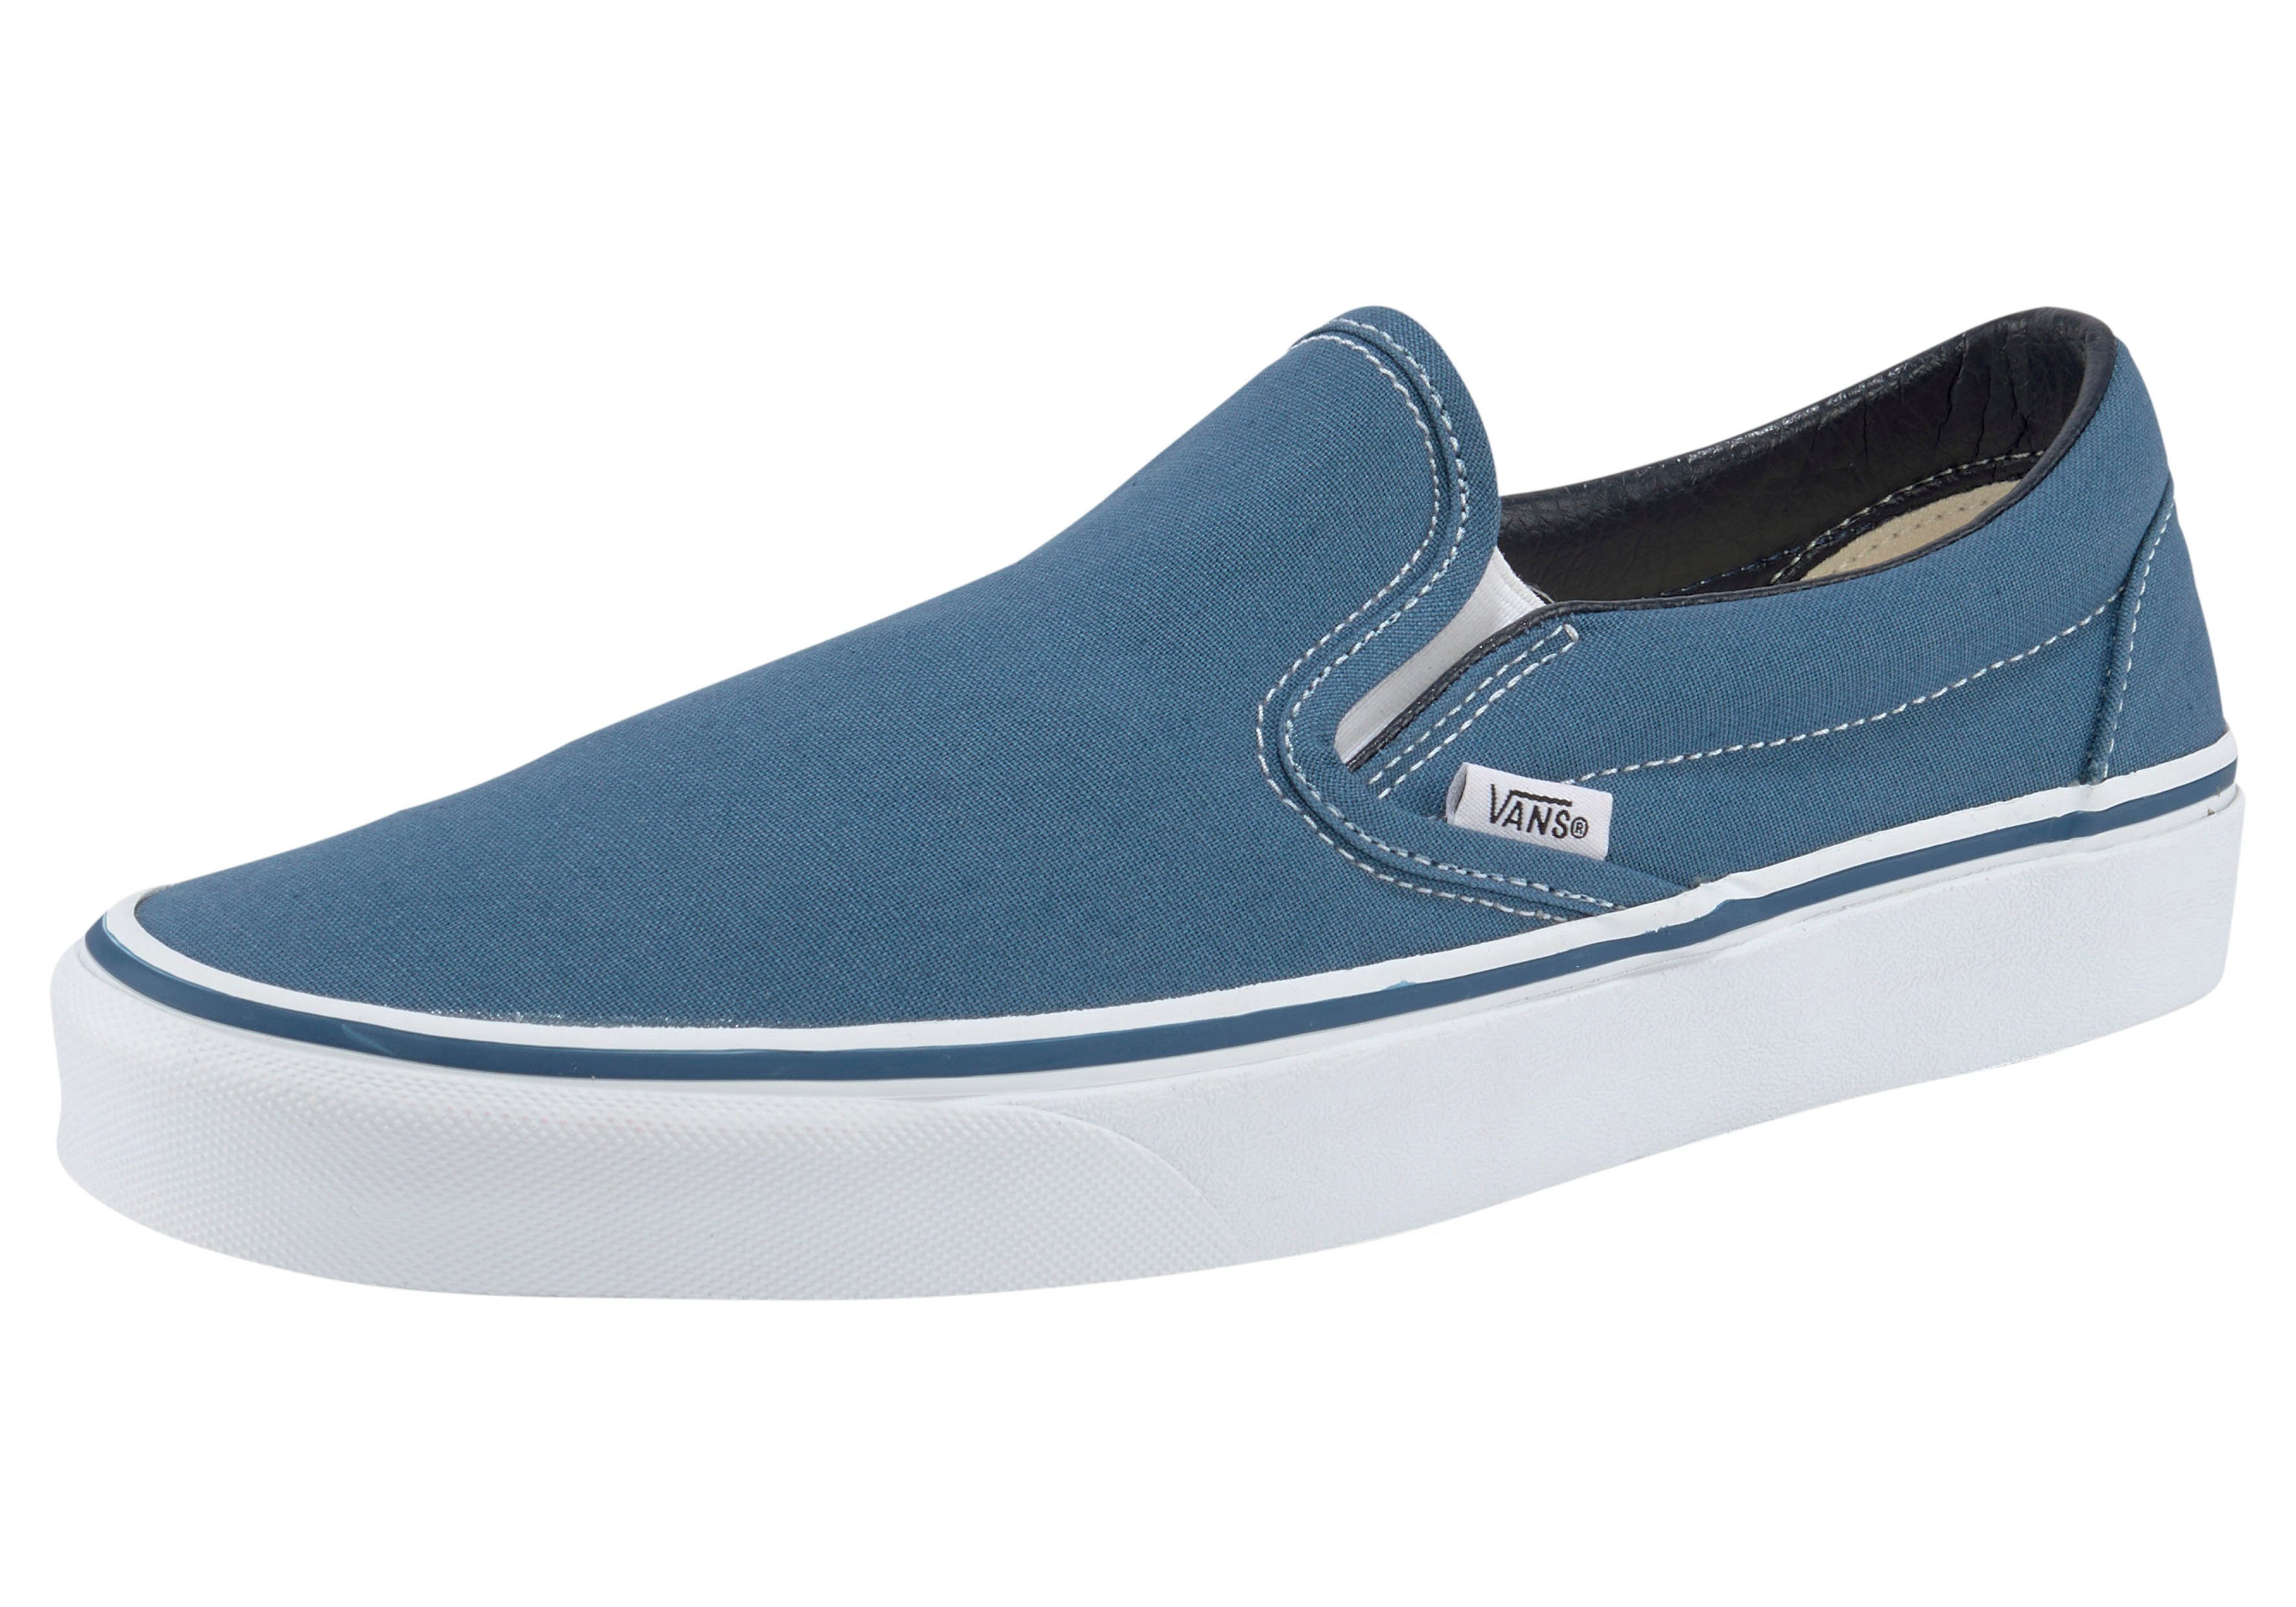 Vans Classic Slip-On Sneaker online kaufen | OTTO